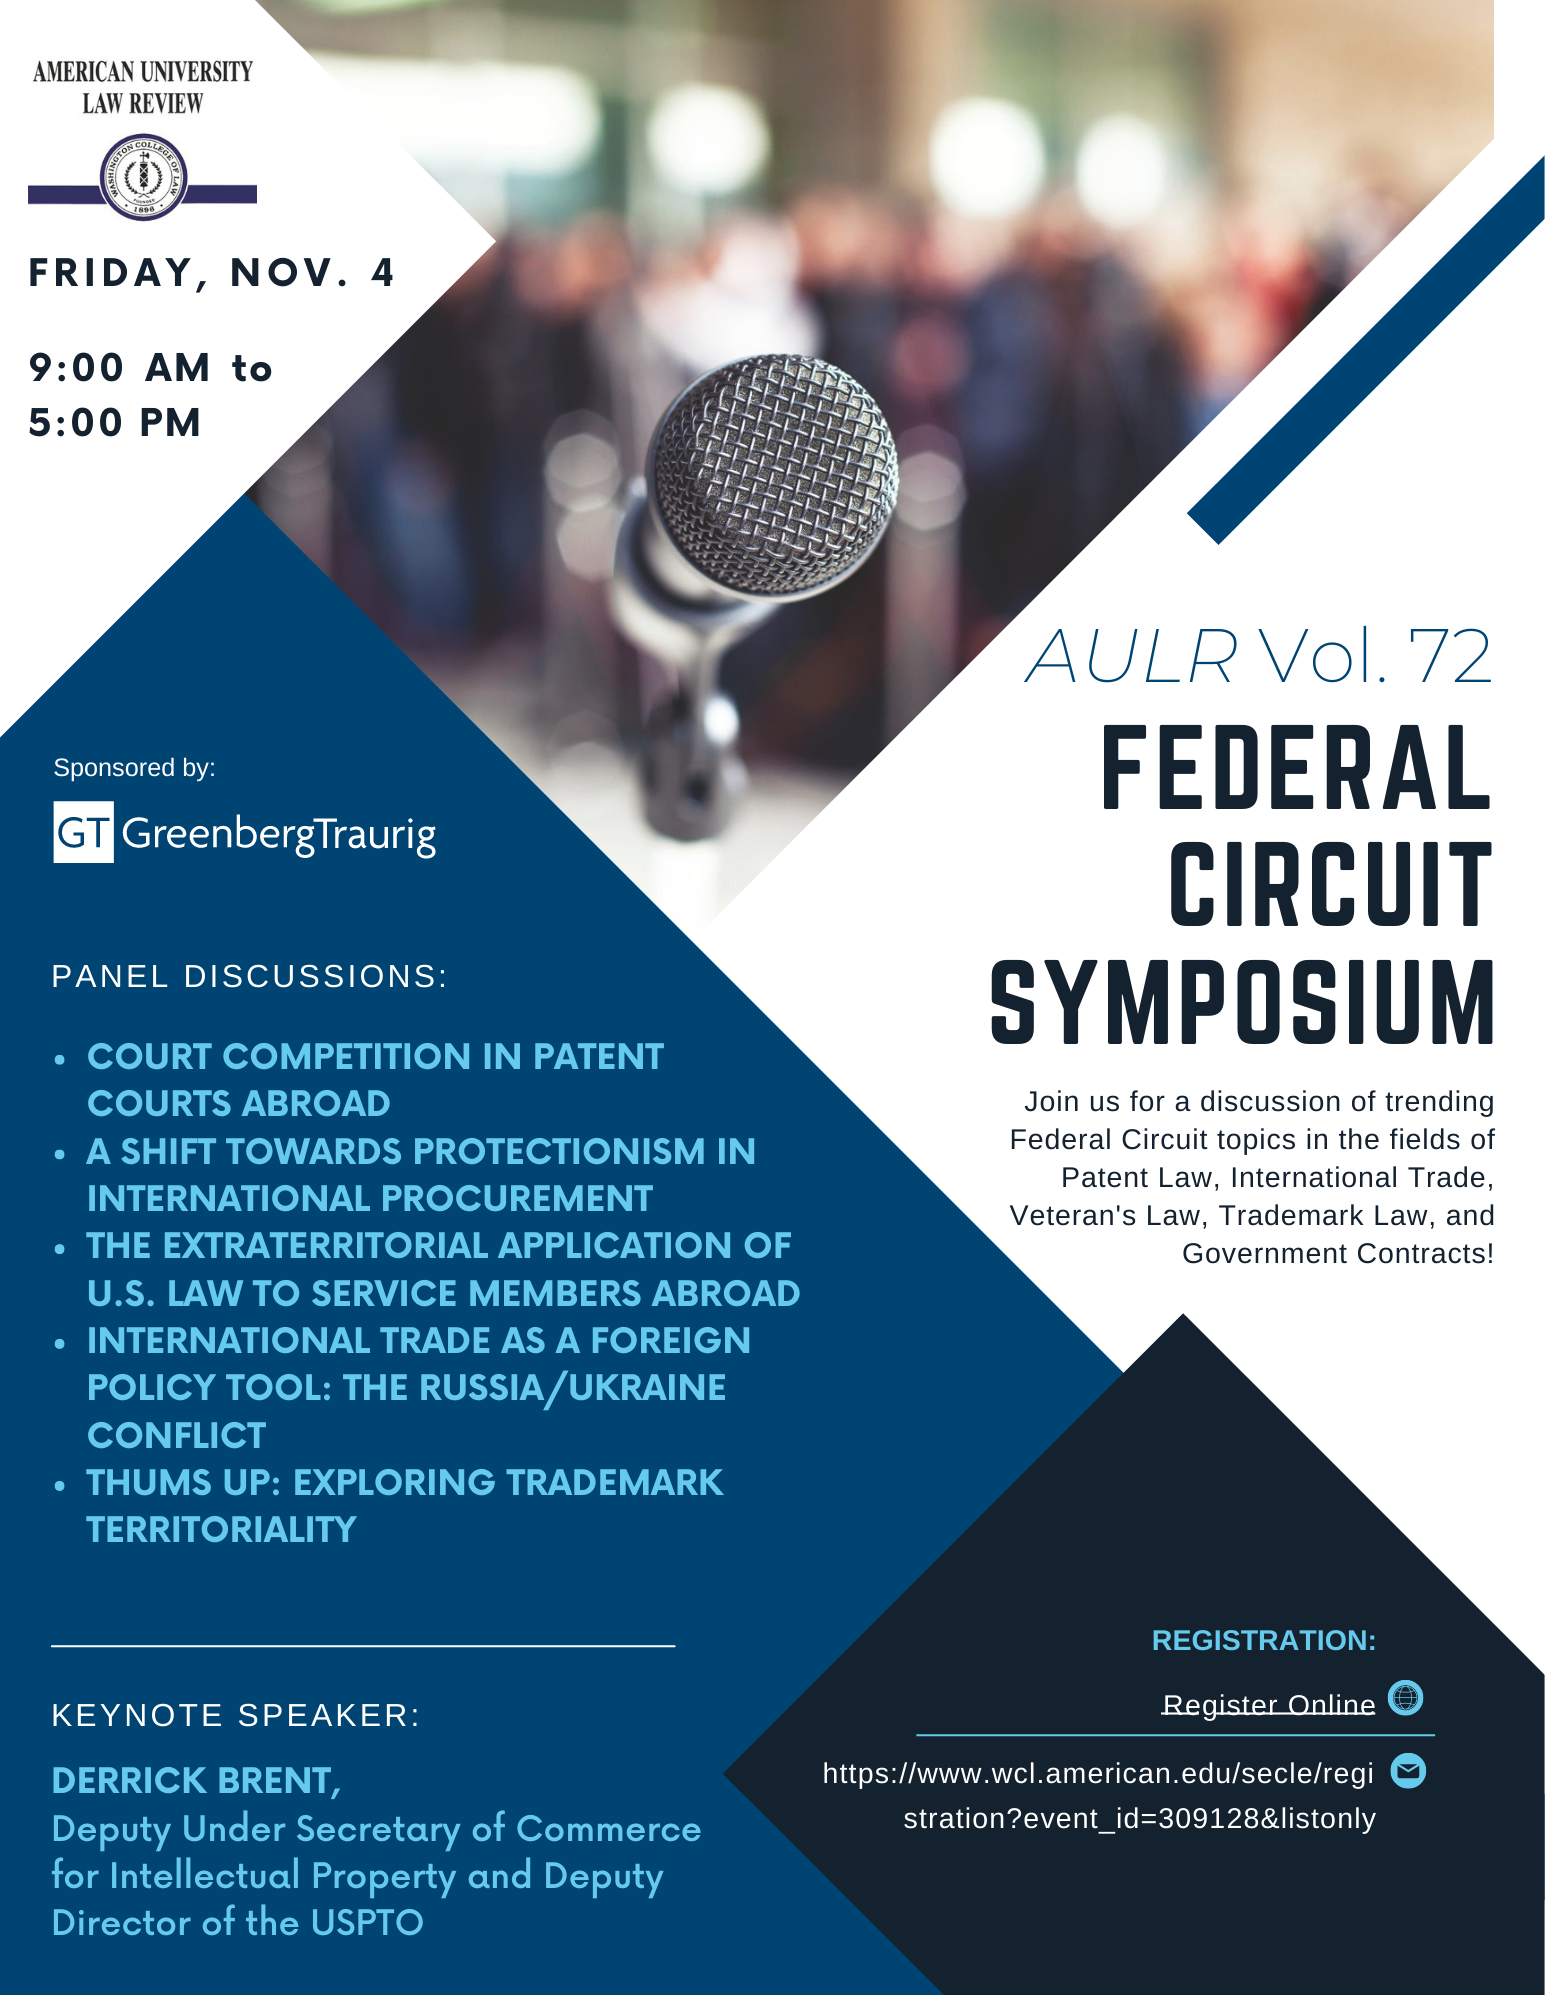 AULR Federal Circuit Symposium Flyer